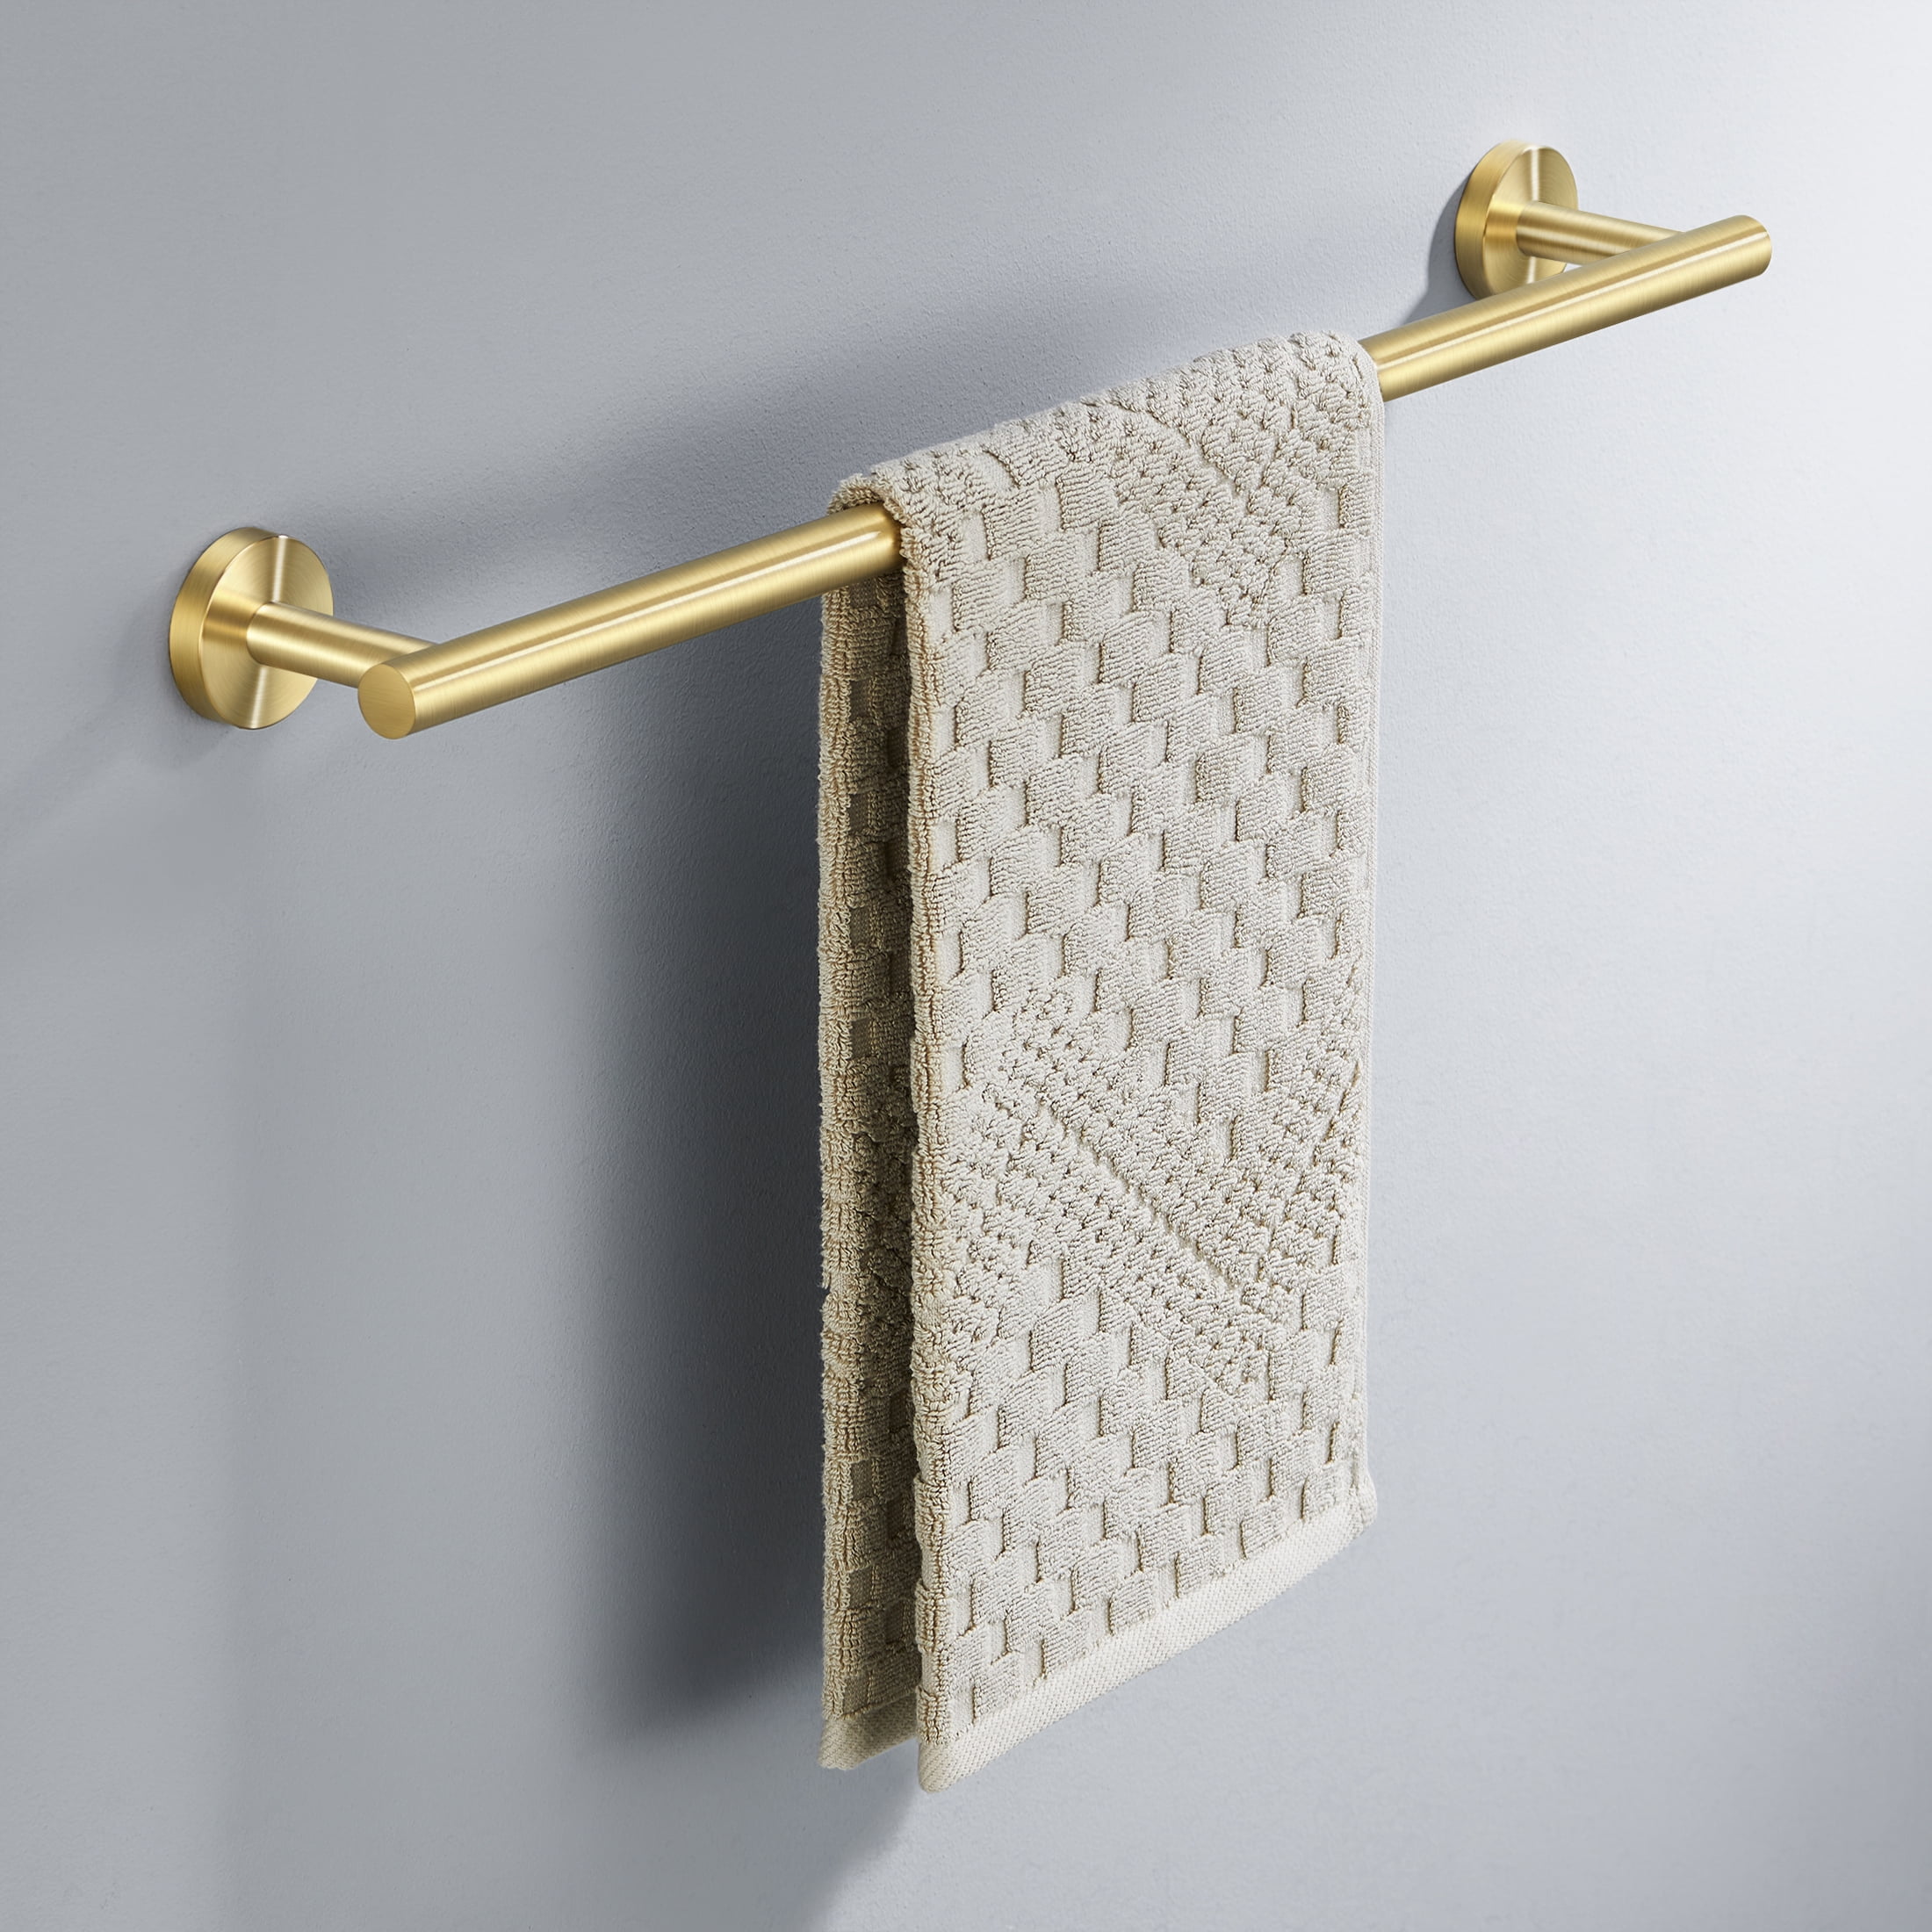 Gold Polished Brass Wall Mount Bathroom Towel Rail Holder Rack Bar Shelf sba101 